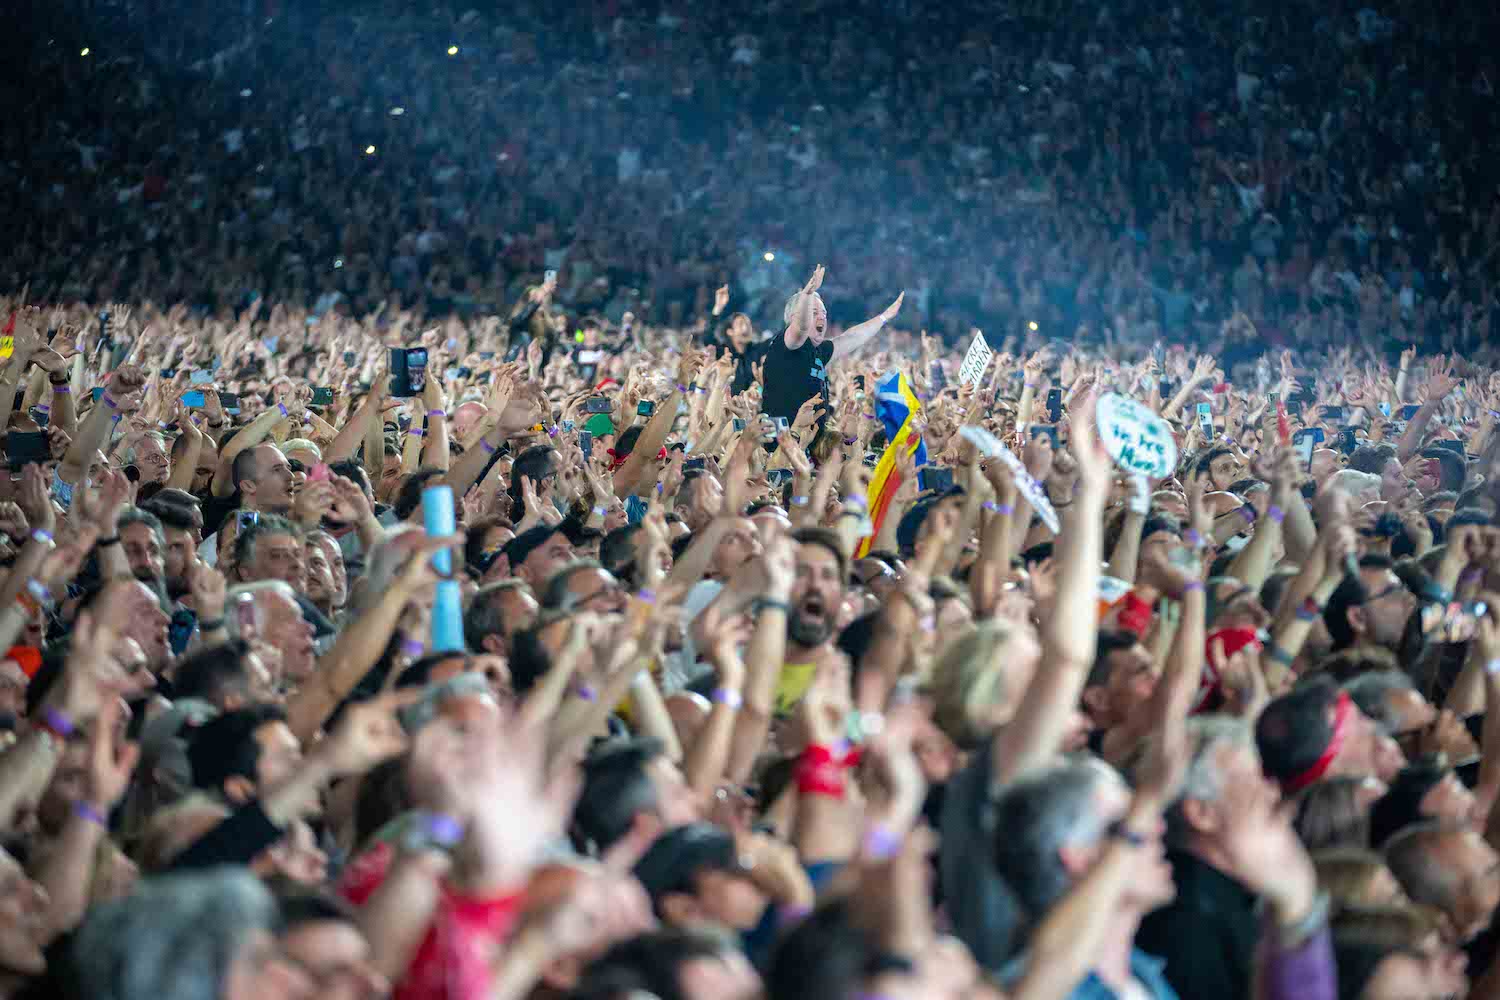 Bruce Springsteen & E Street Band at Estadi Olímpic, Barcelona, Spain on April 28, 2023.